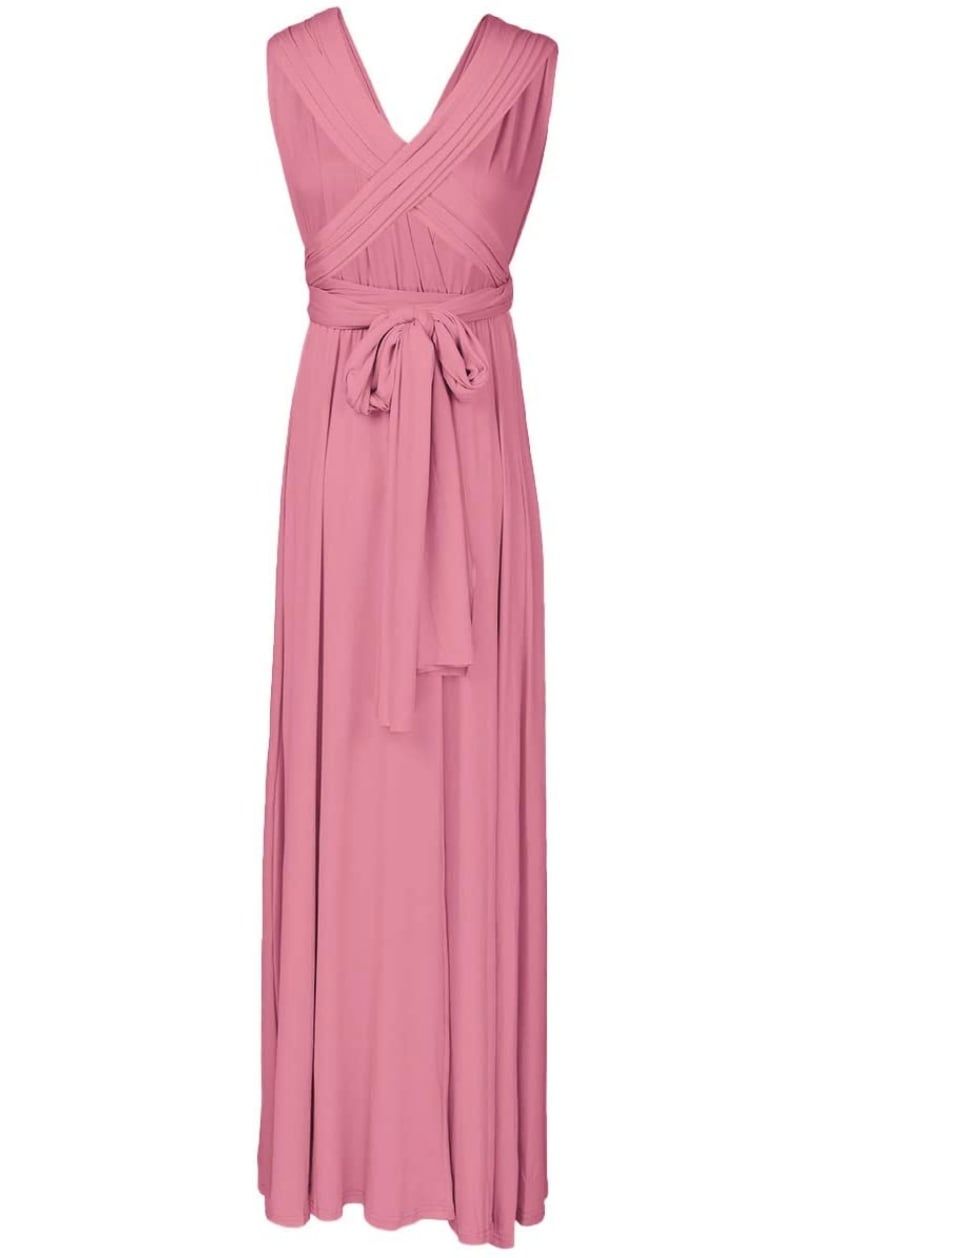 Style B073CGBPLG IWEMEK Size 4 Bridesmaid Pink Floor Length Maxi on Queenly